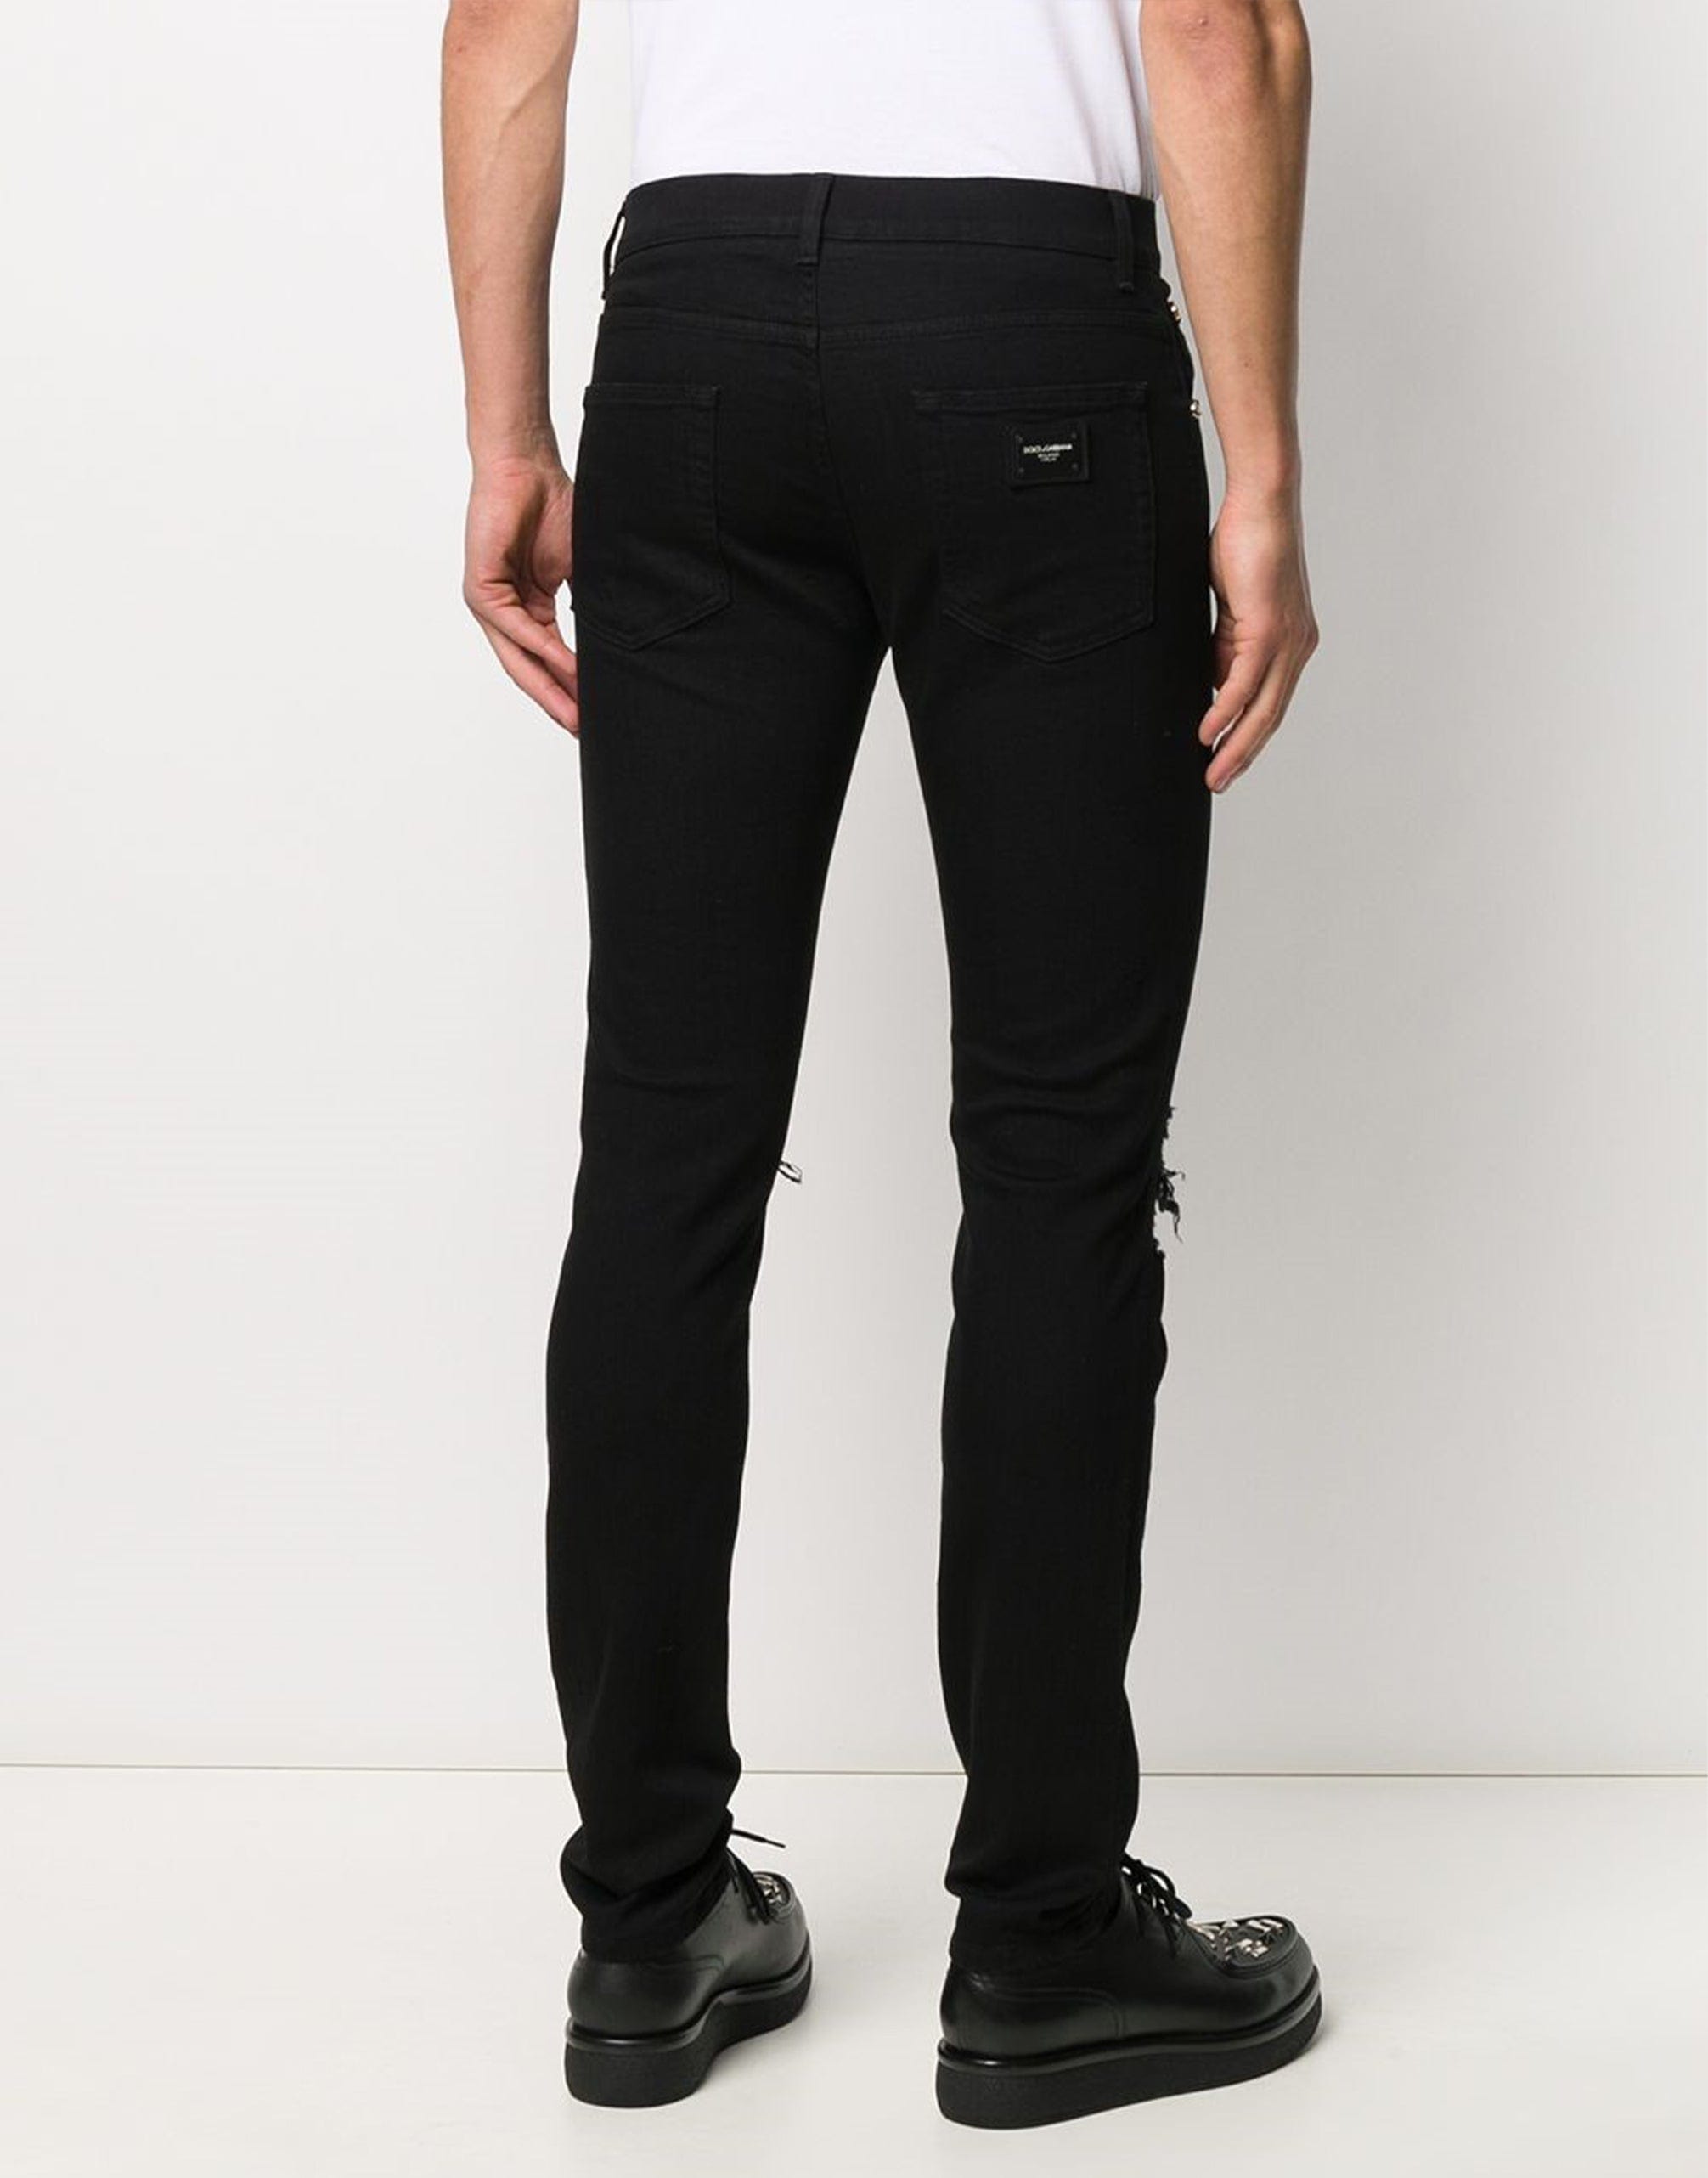 Dolce & Gabbana Distressed Skinny Fit Jeans